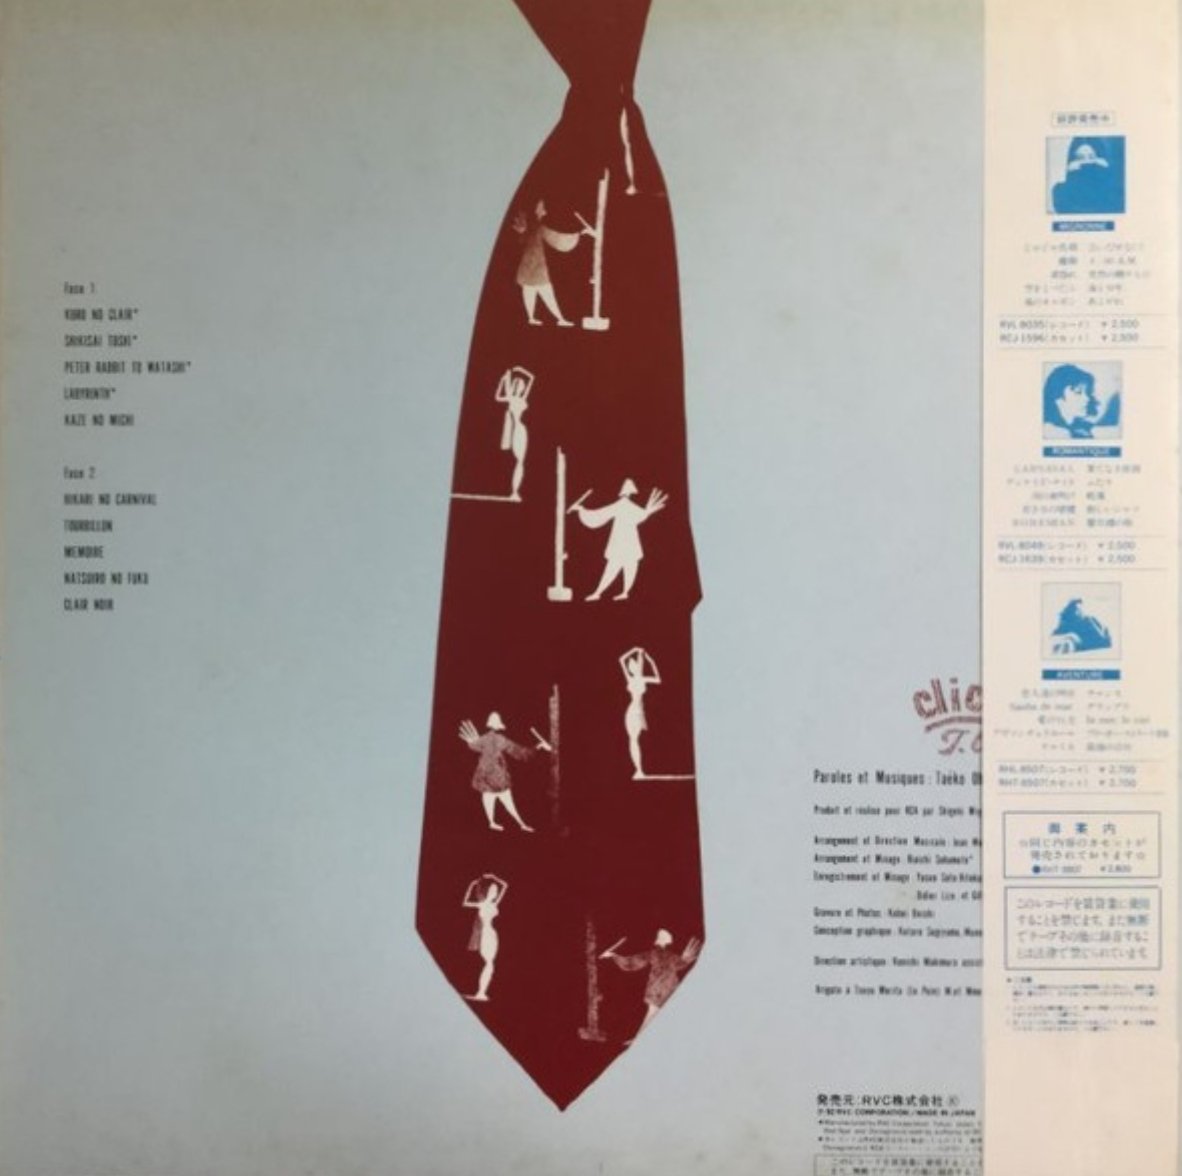 Taeko Onuki - Cliché (Japan Import) - Inner Ocean Records